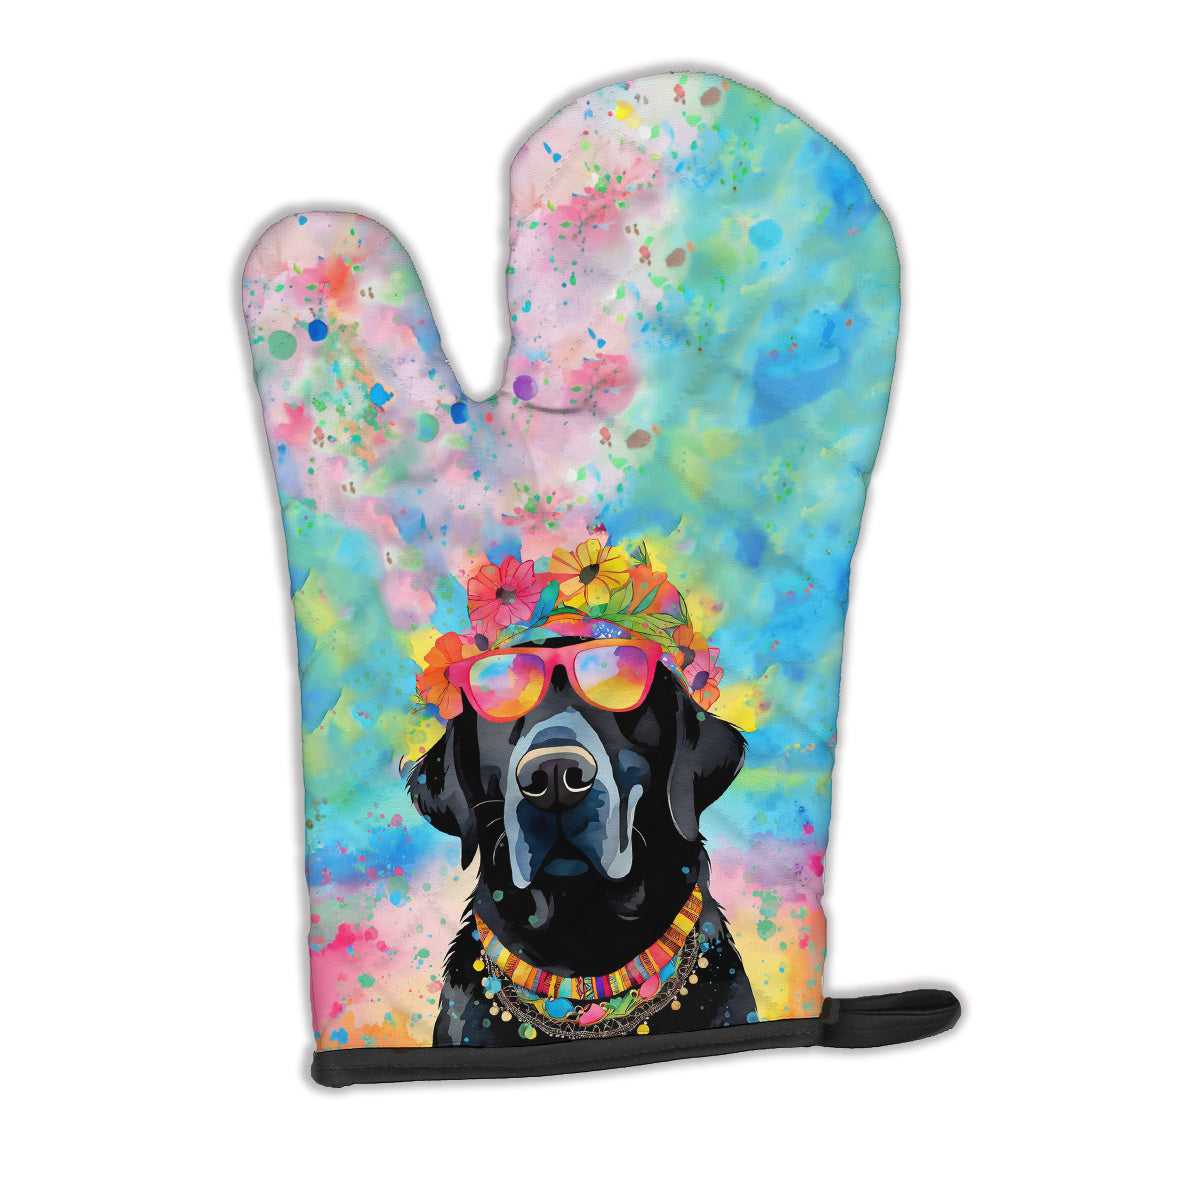 Buy this Black Labrador Hippie Dawg Oven Mitt